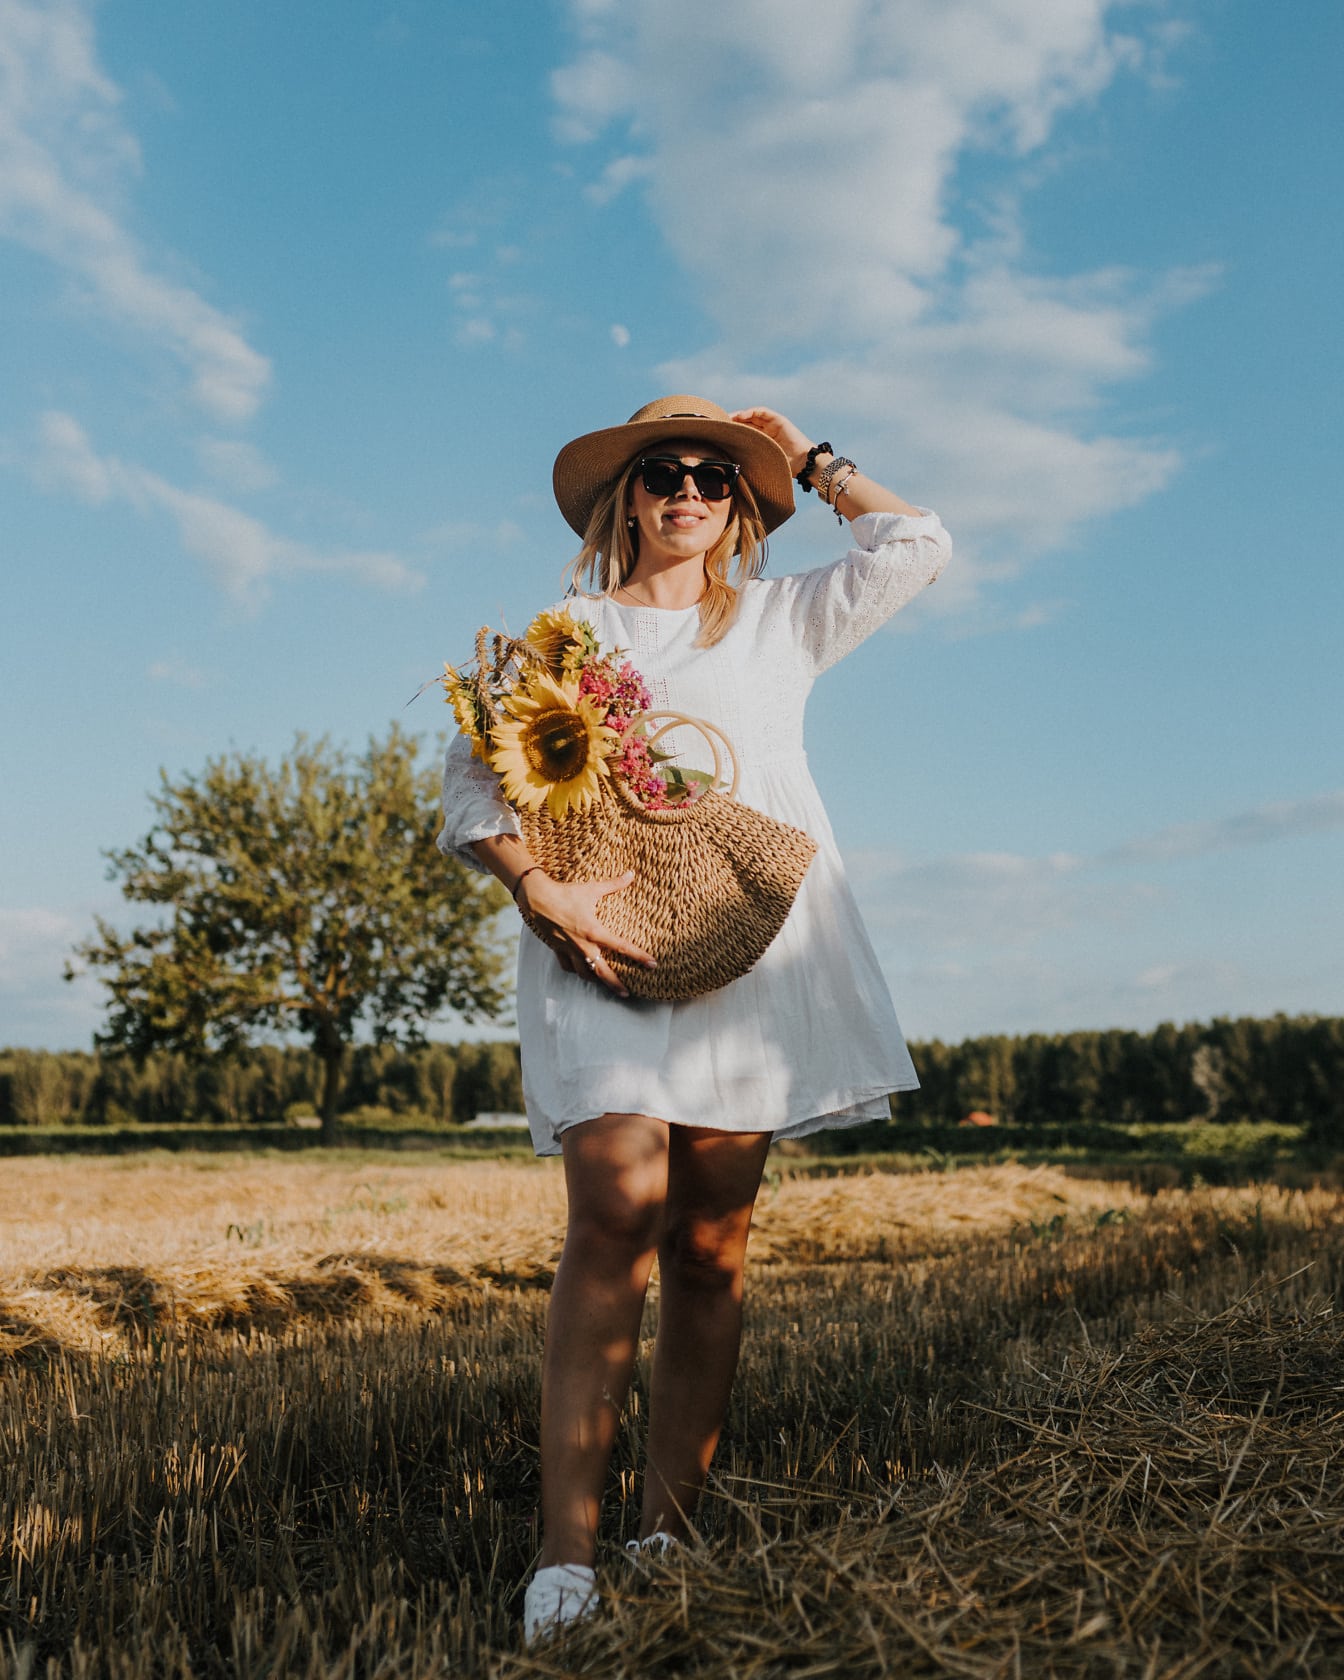 Шикарна фотомодель з плетеним кошиком і солом’яним капелюхом на пшеничному полі